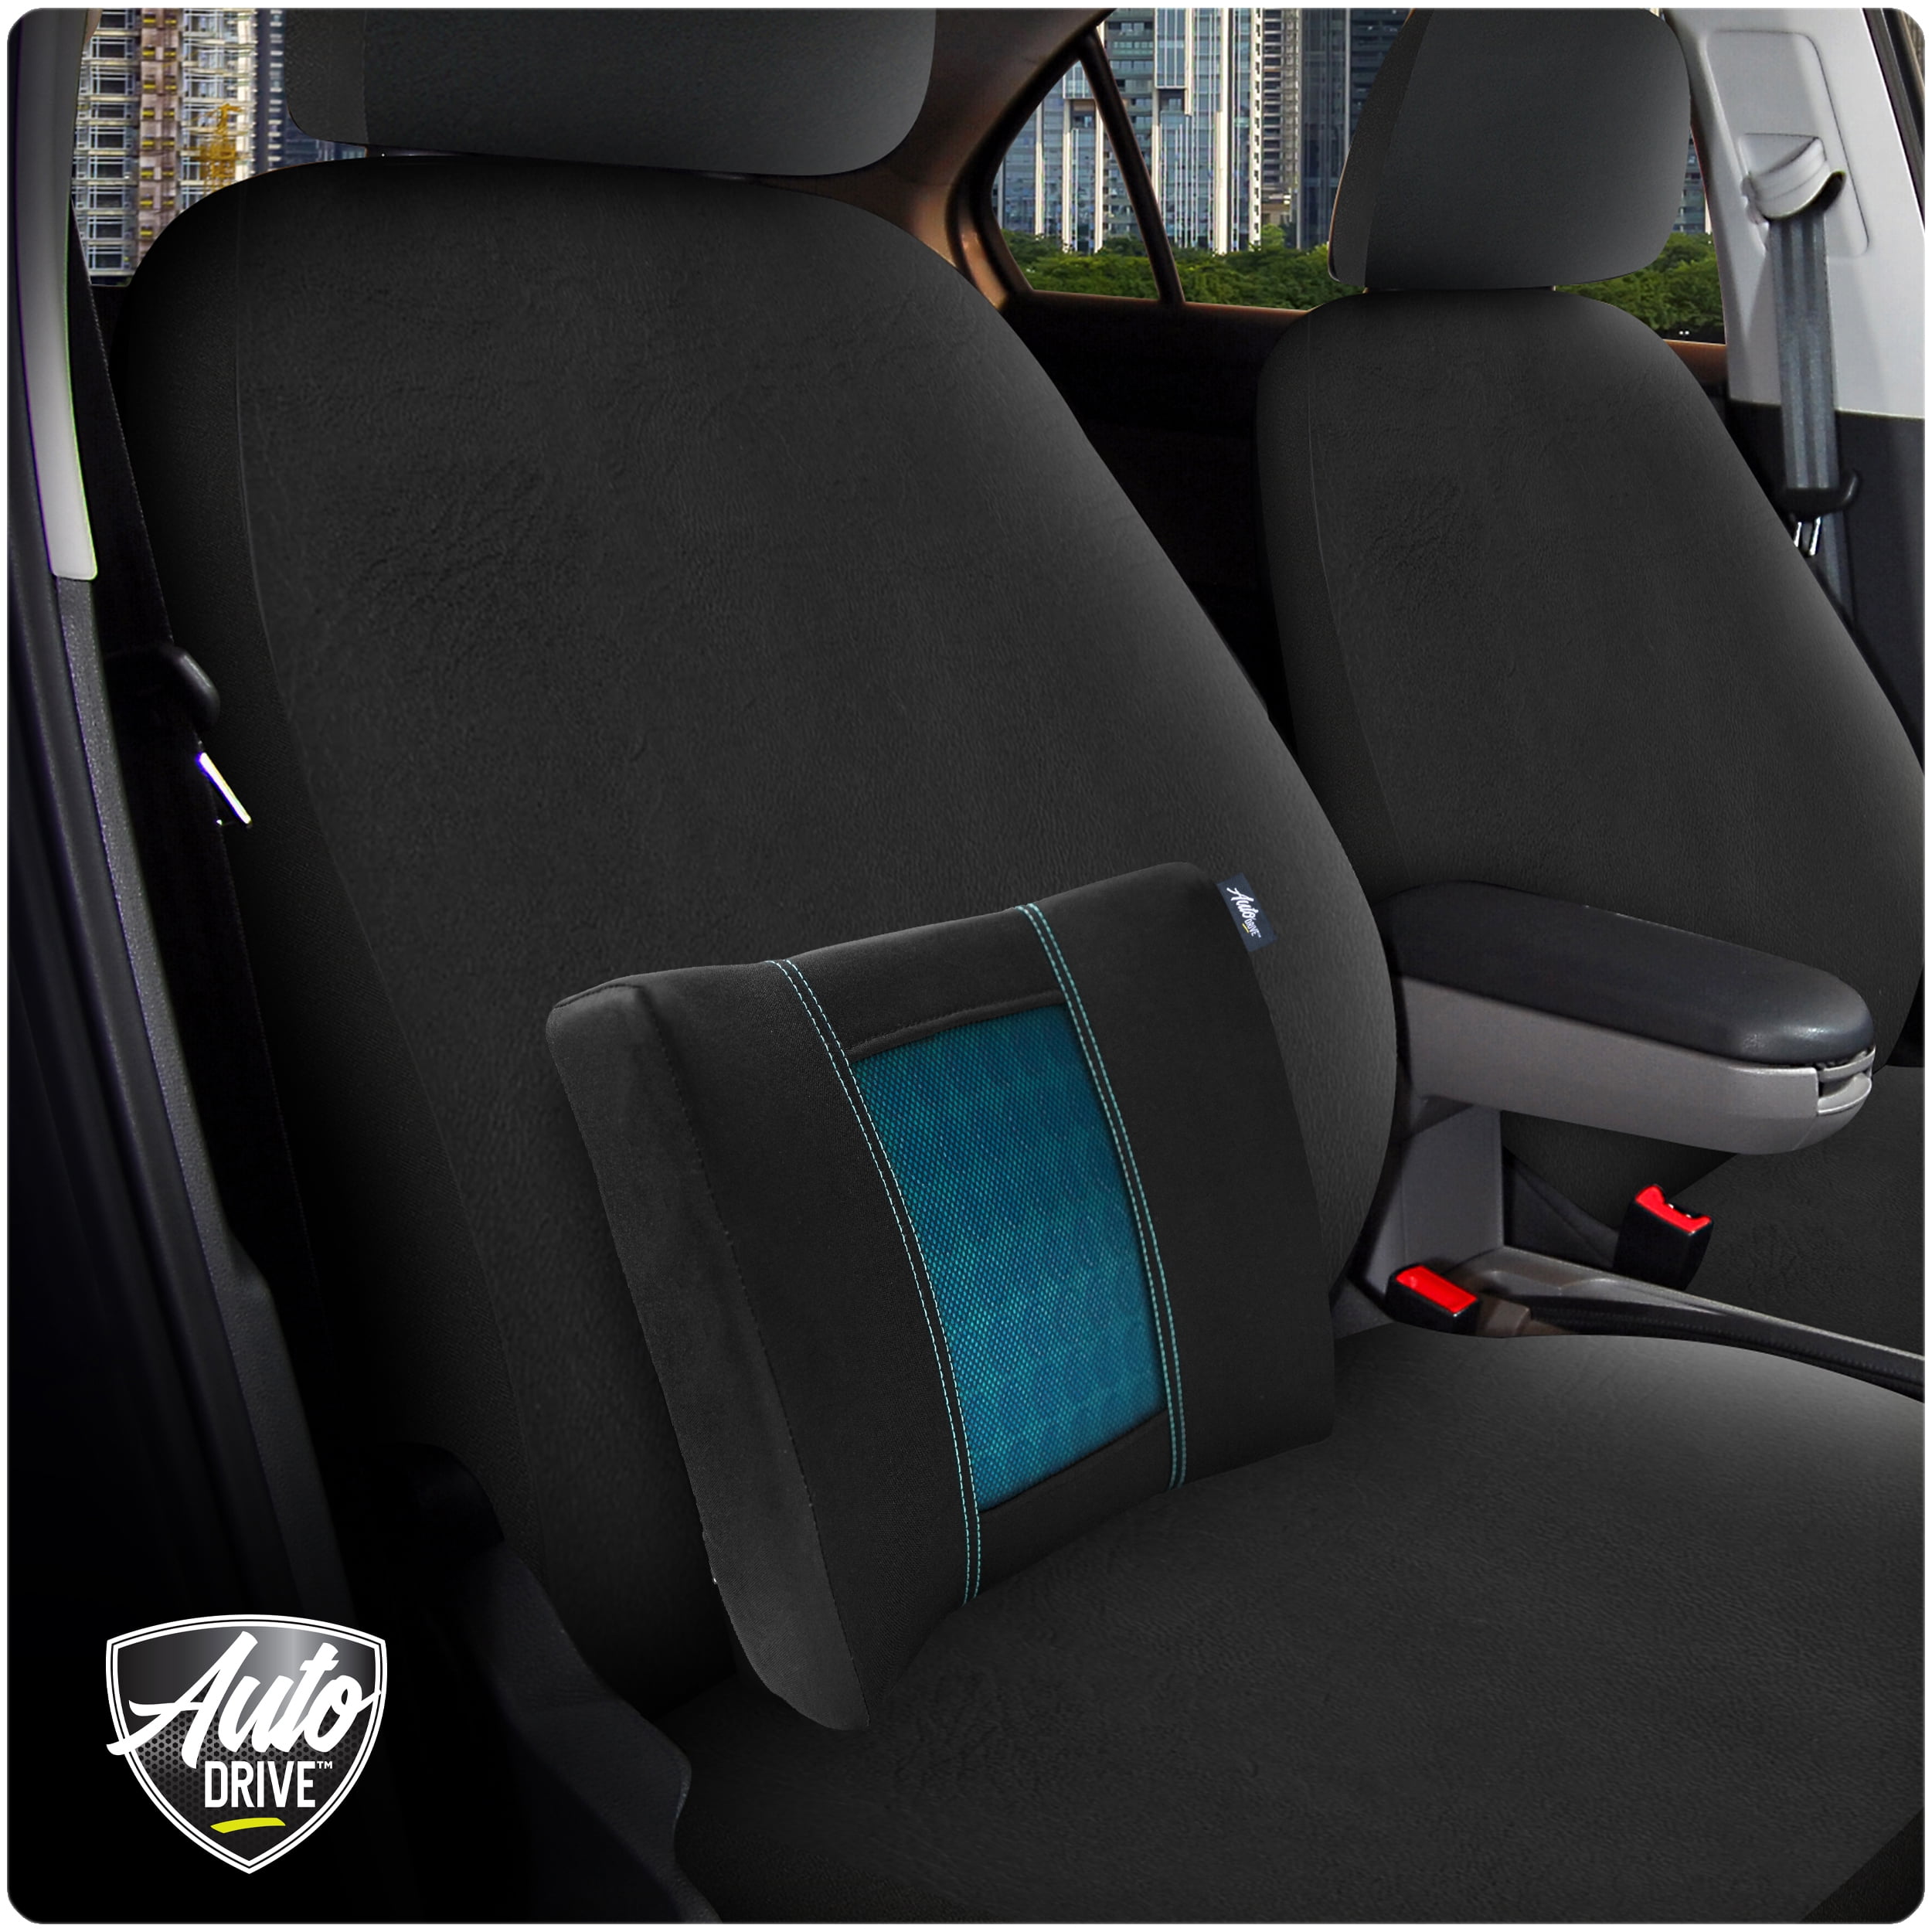 Auto Drive Car Seat Cushion Hex Gel Black and Blue Universal Fit, 19cu